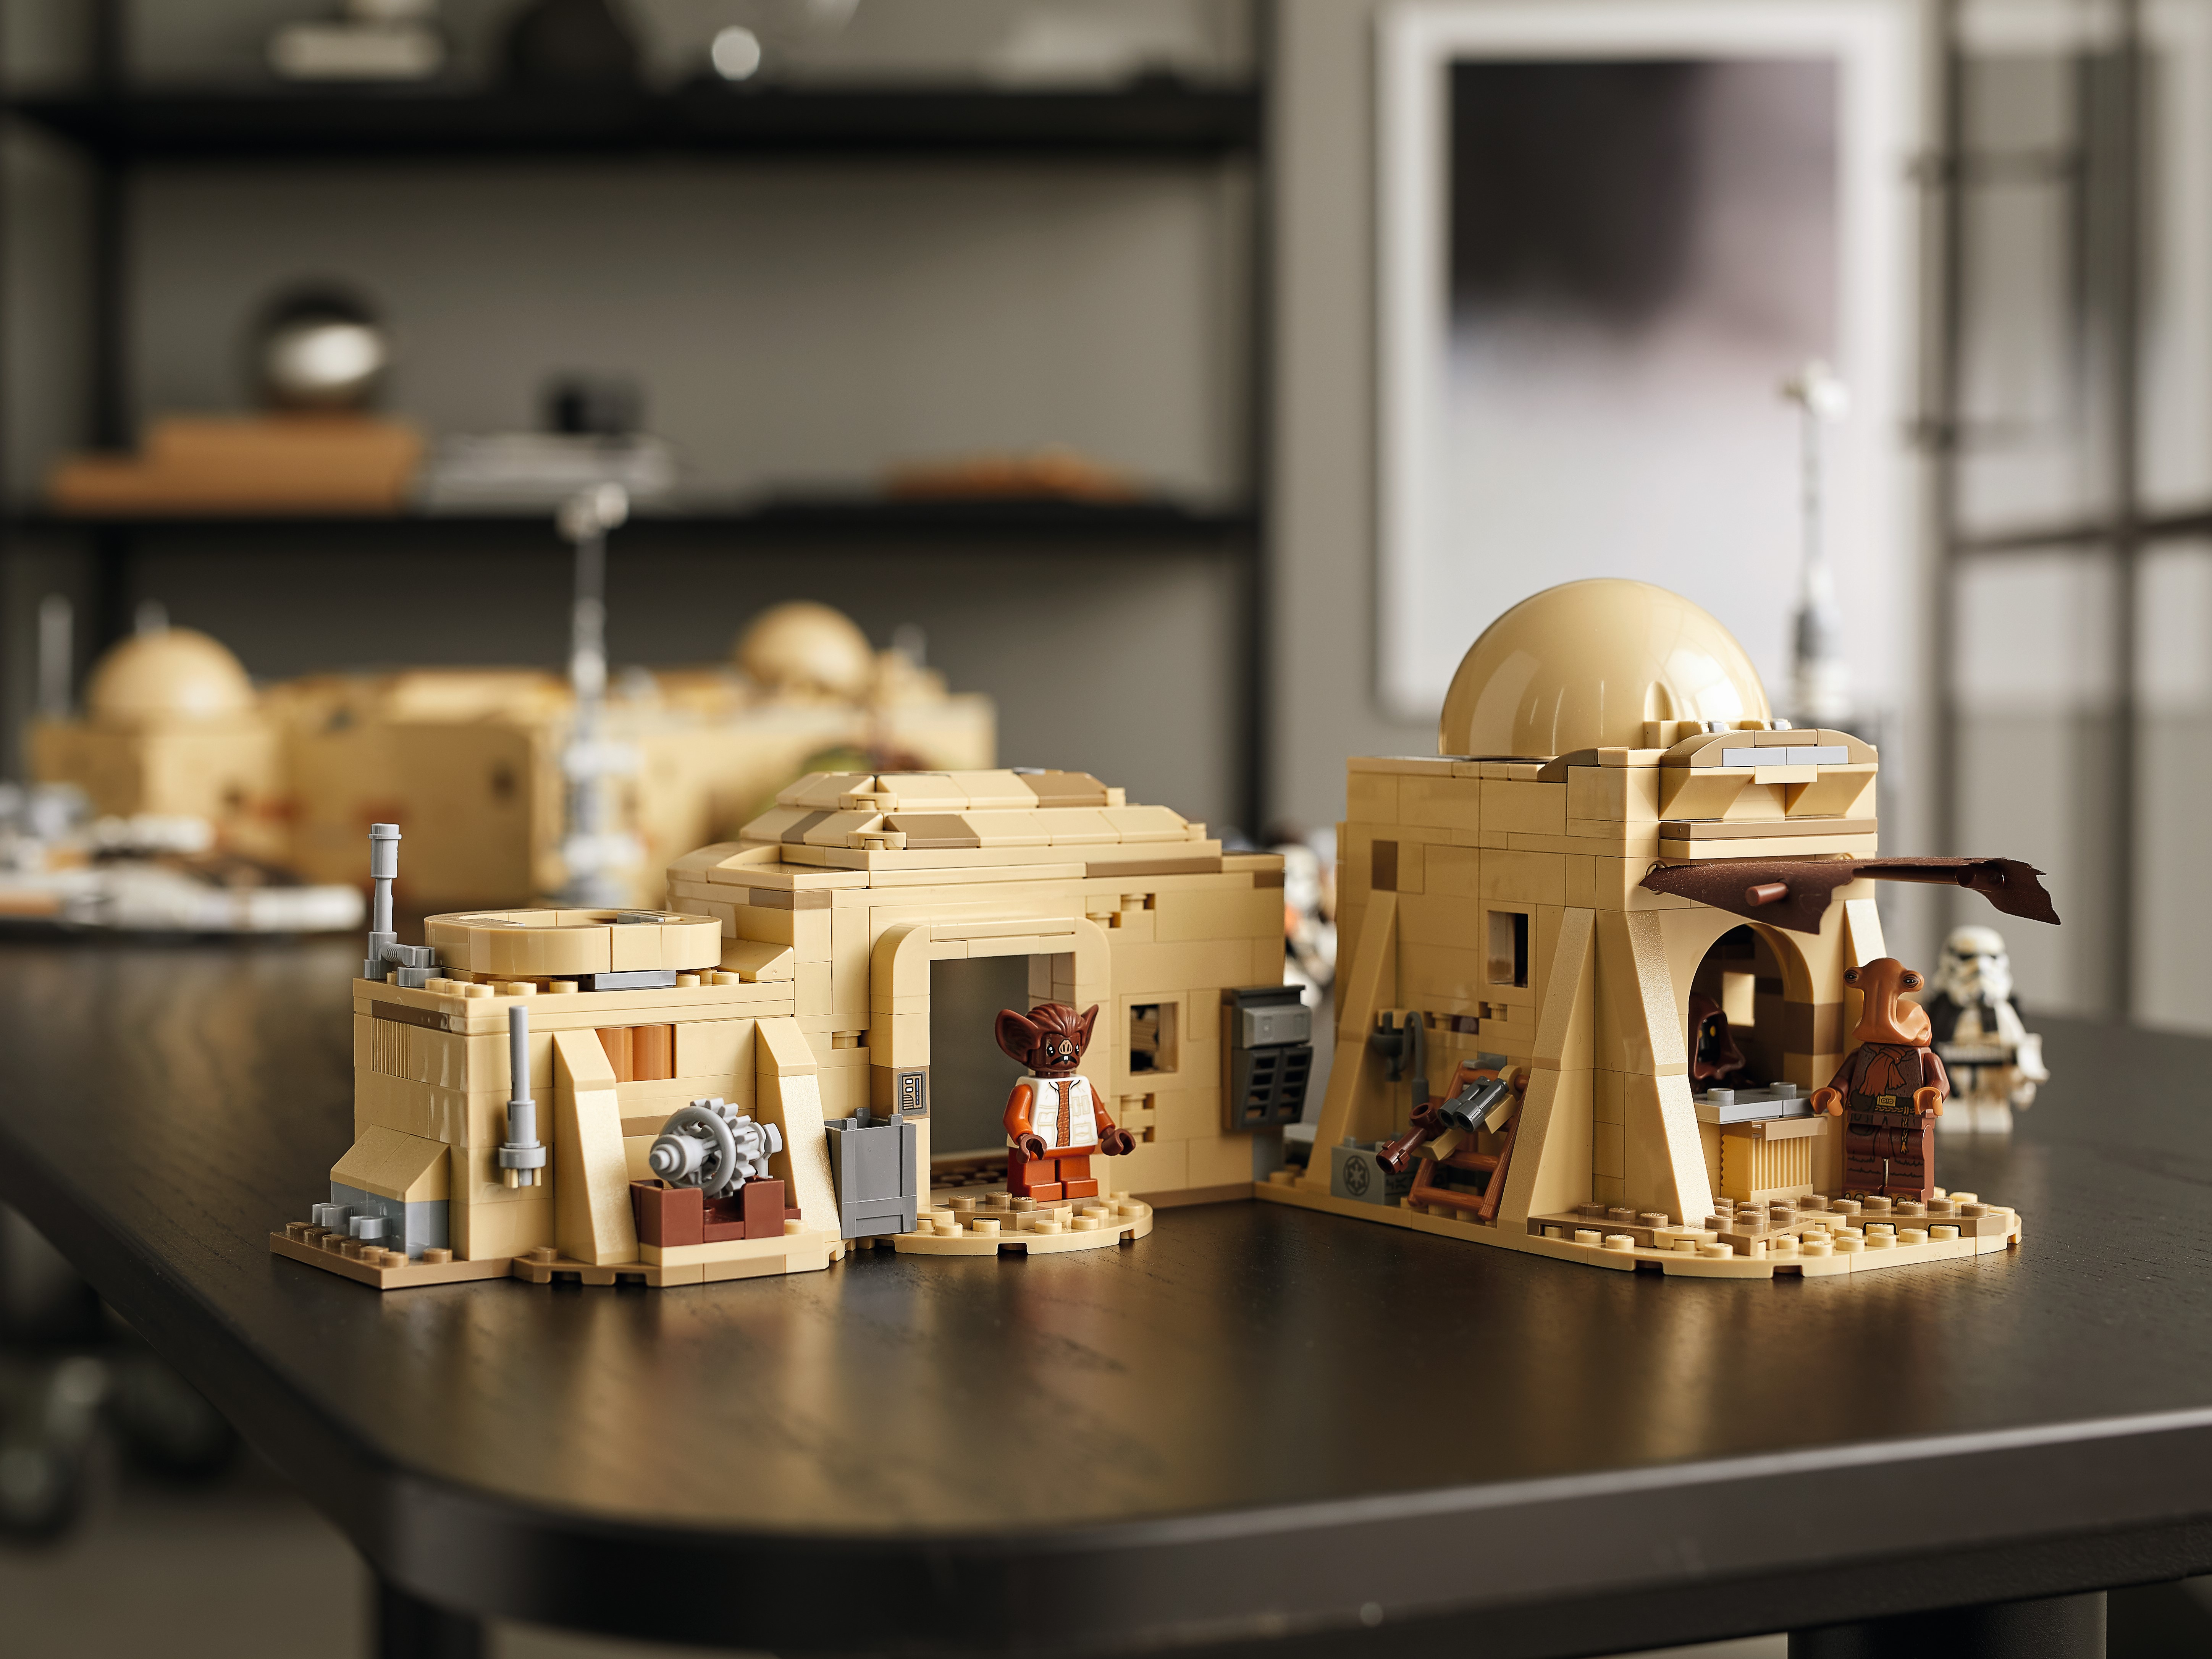 LEGO Star Wars 75290 Mos Eisley Cantina - largest Master Builder